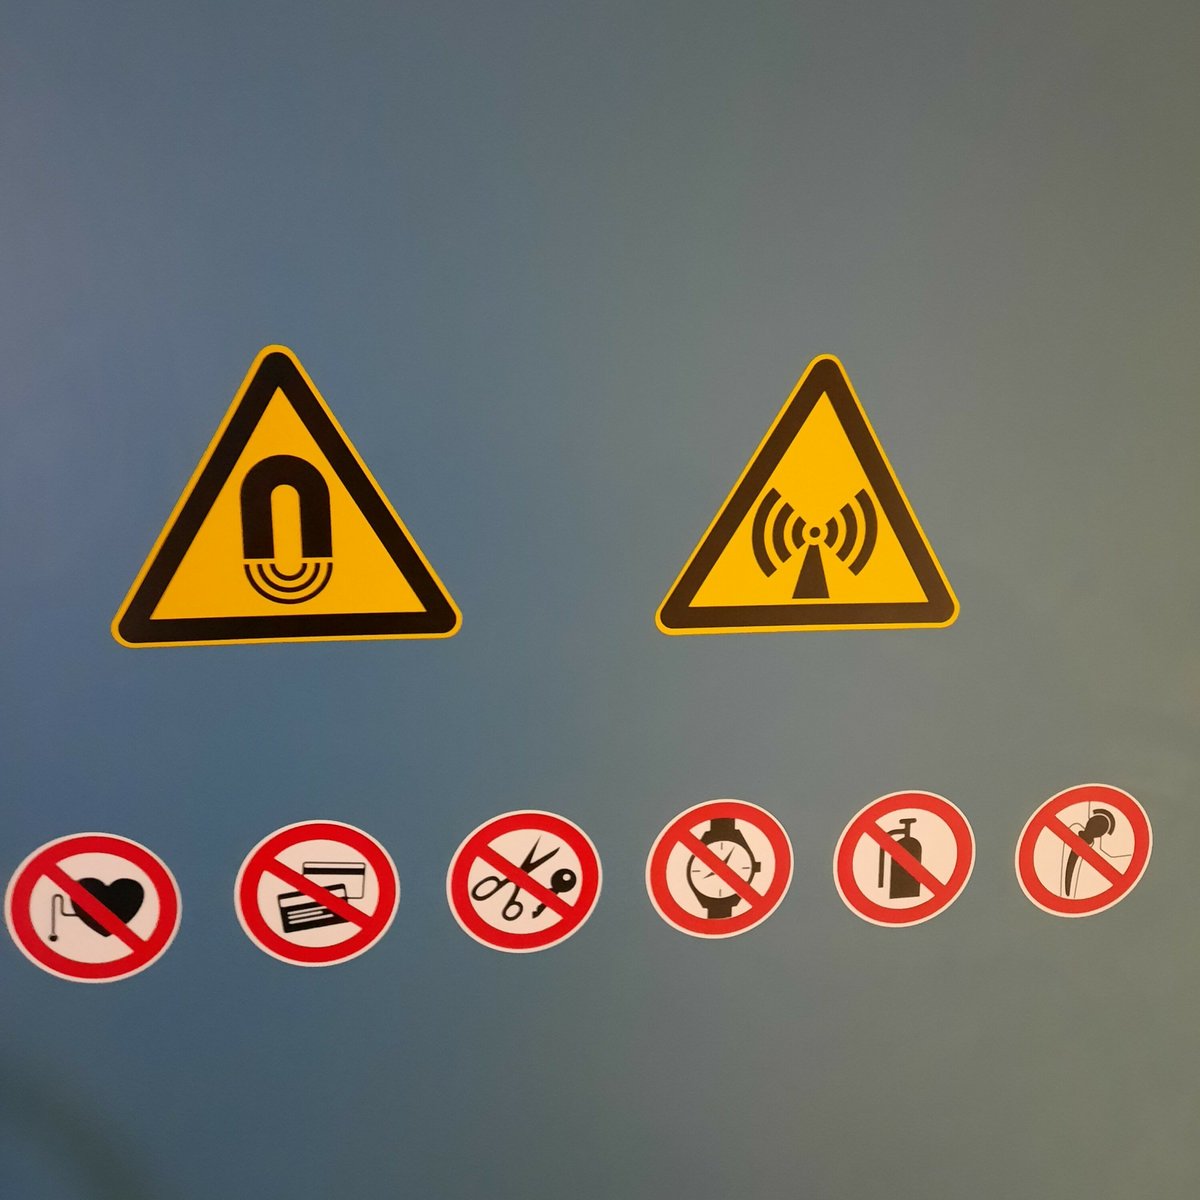 MRI warning signs